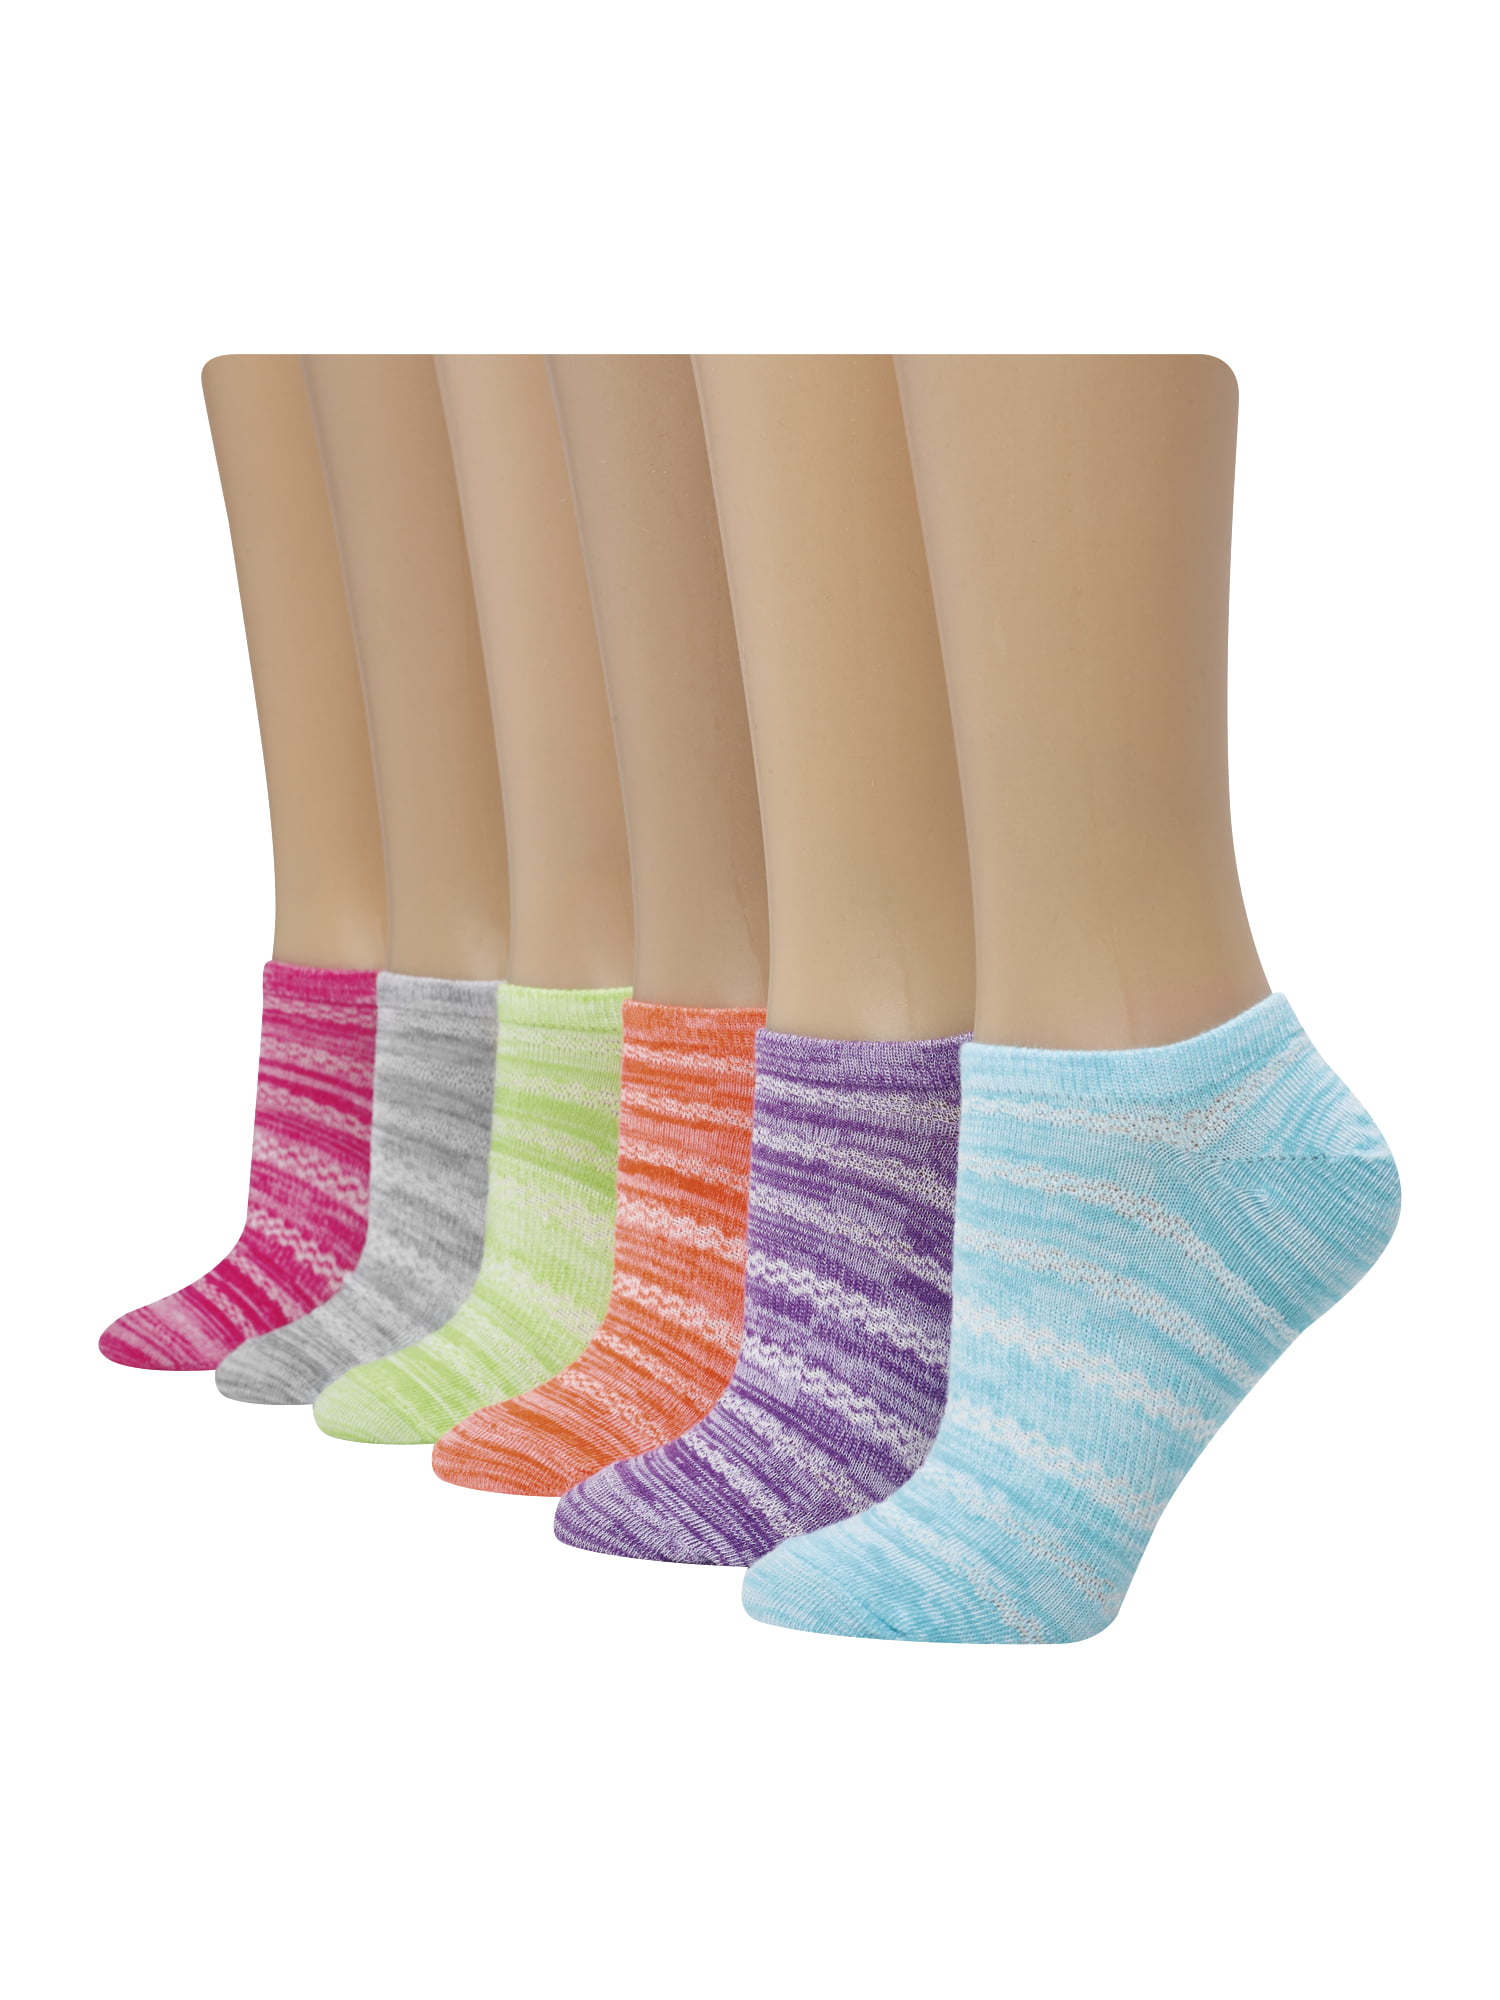 3 Pack Mens Plain Super Soft Bamboo Blend Socks Thin Light Weight Summer Socks